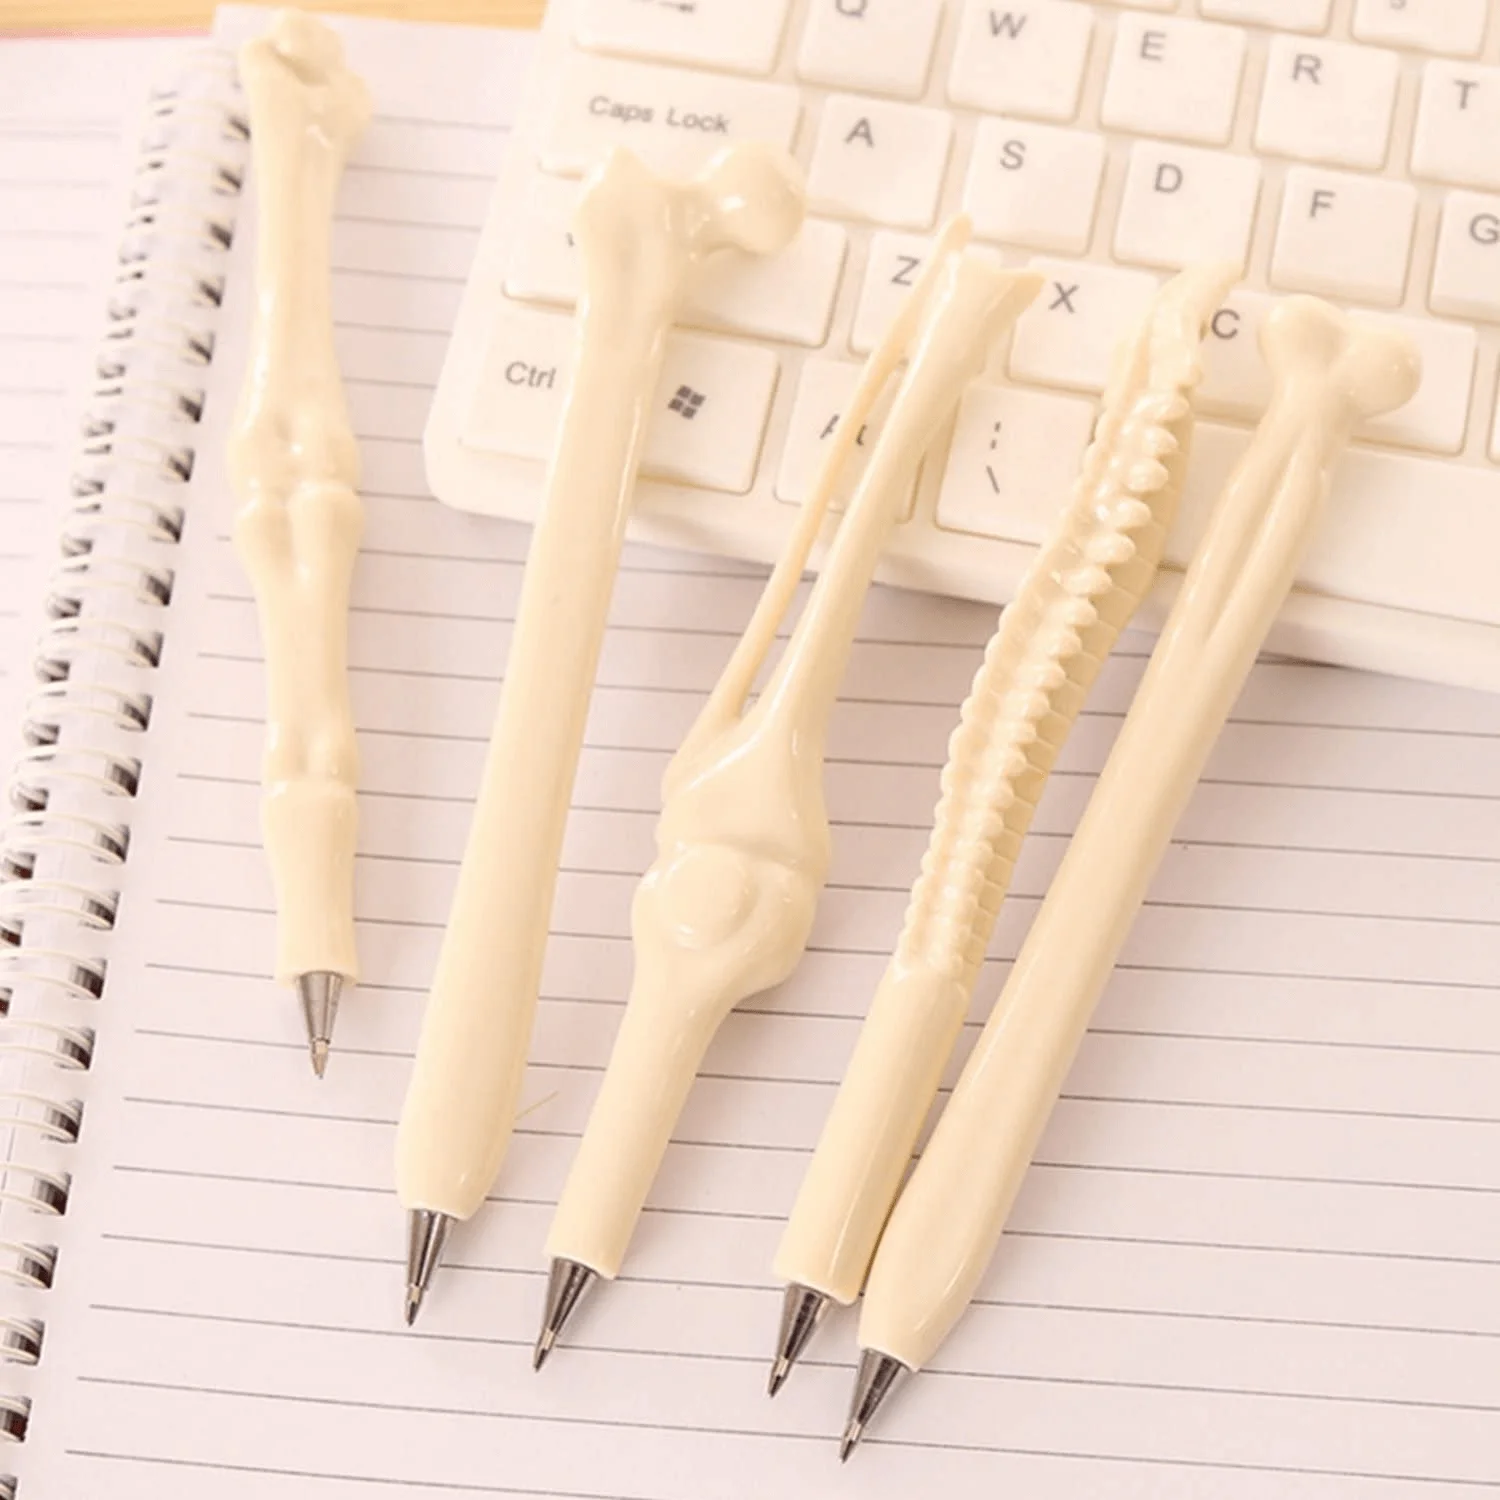 Bone Pens